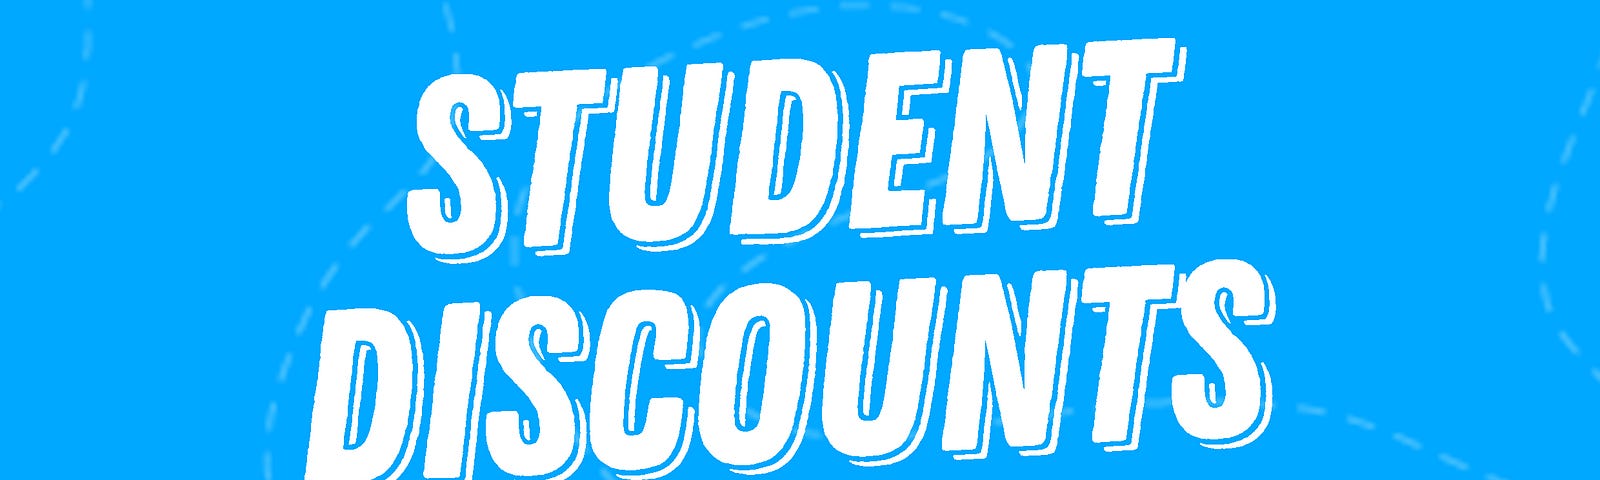 student-discount-deal-medium